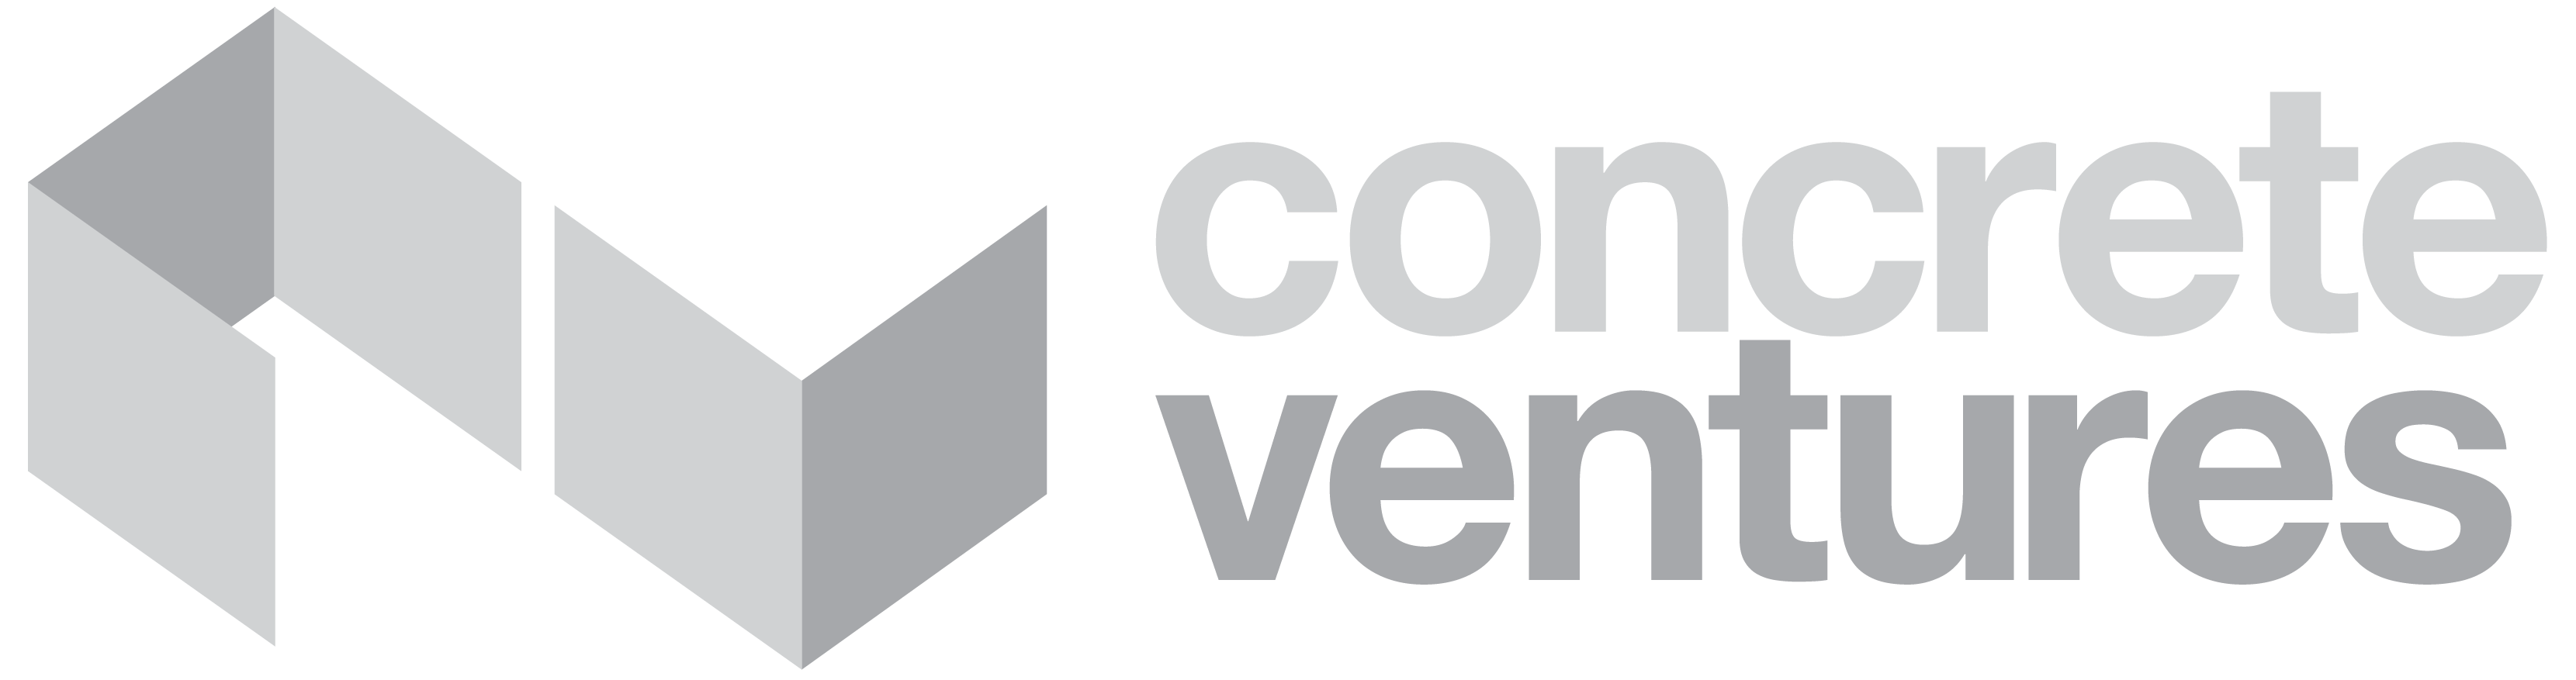 Concrete Ventures logo